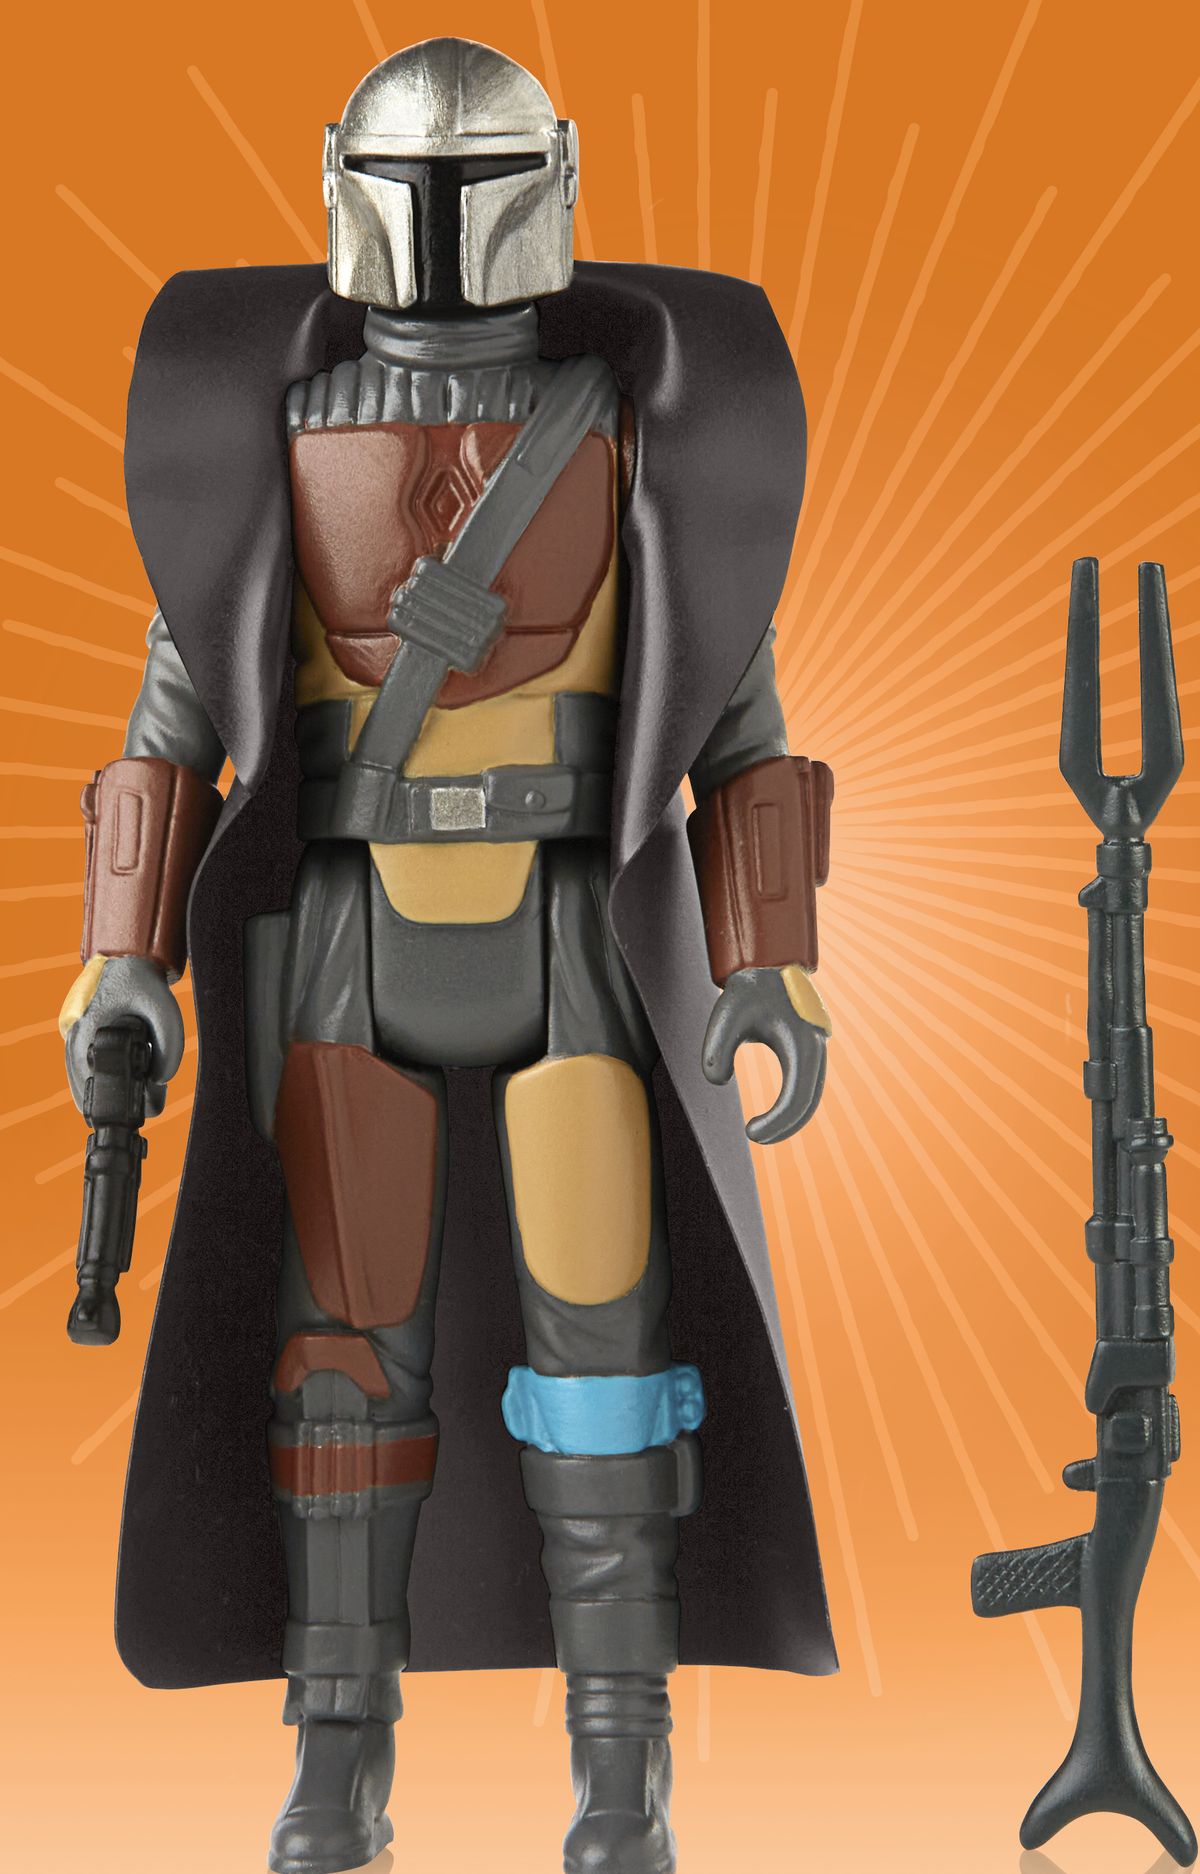 Star Wars’ “retro” Mandalorian figure with gun accessory